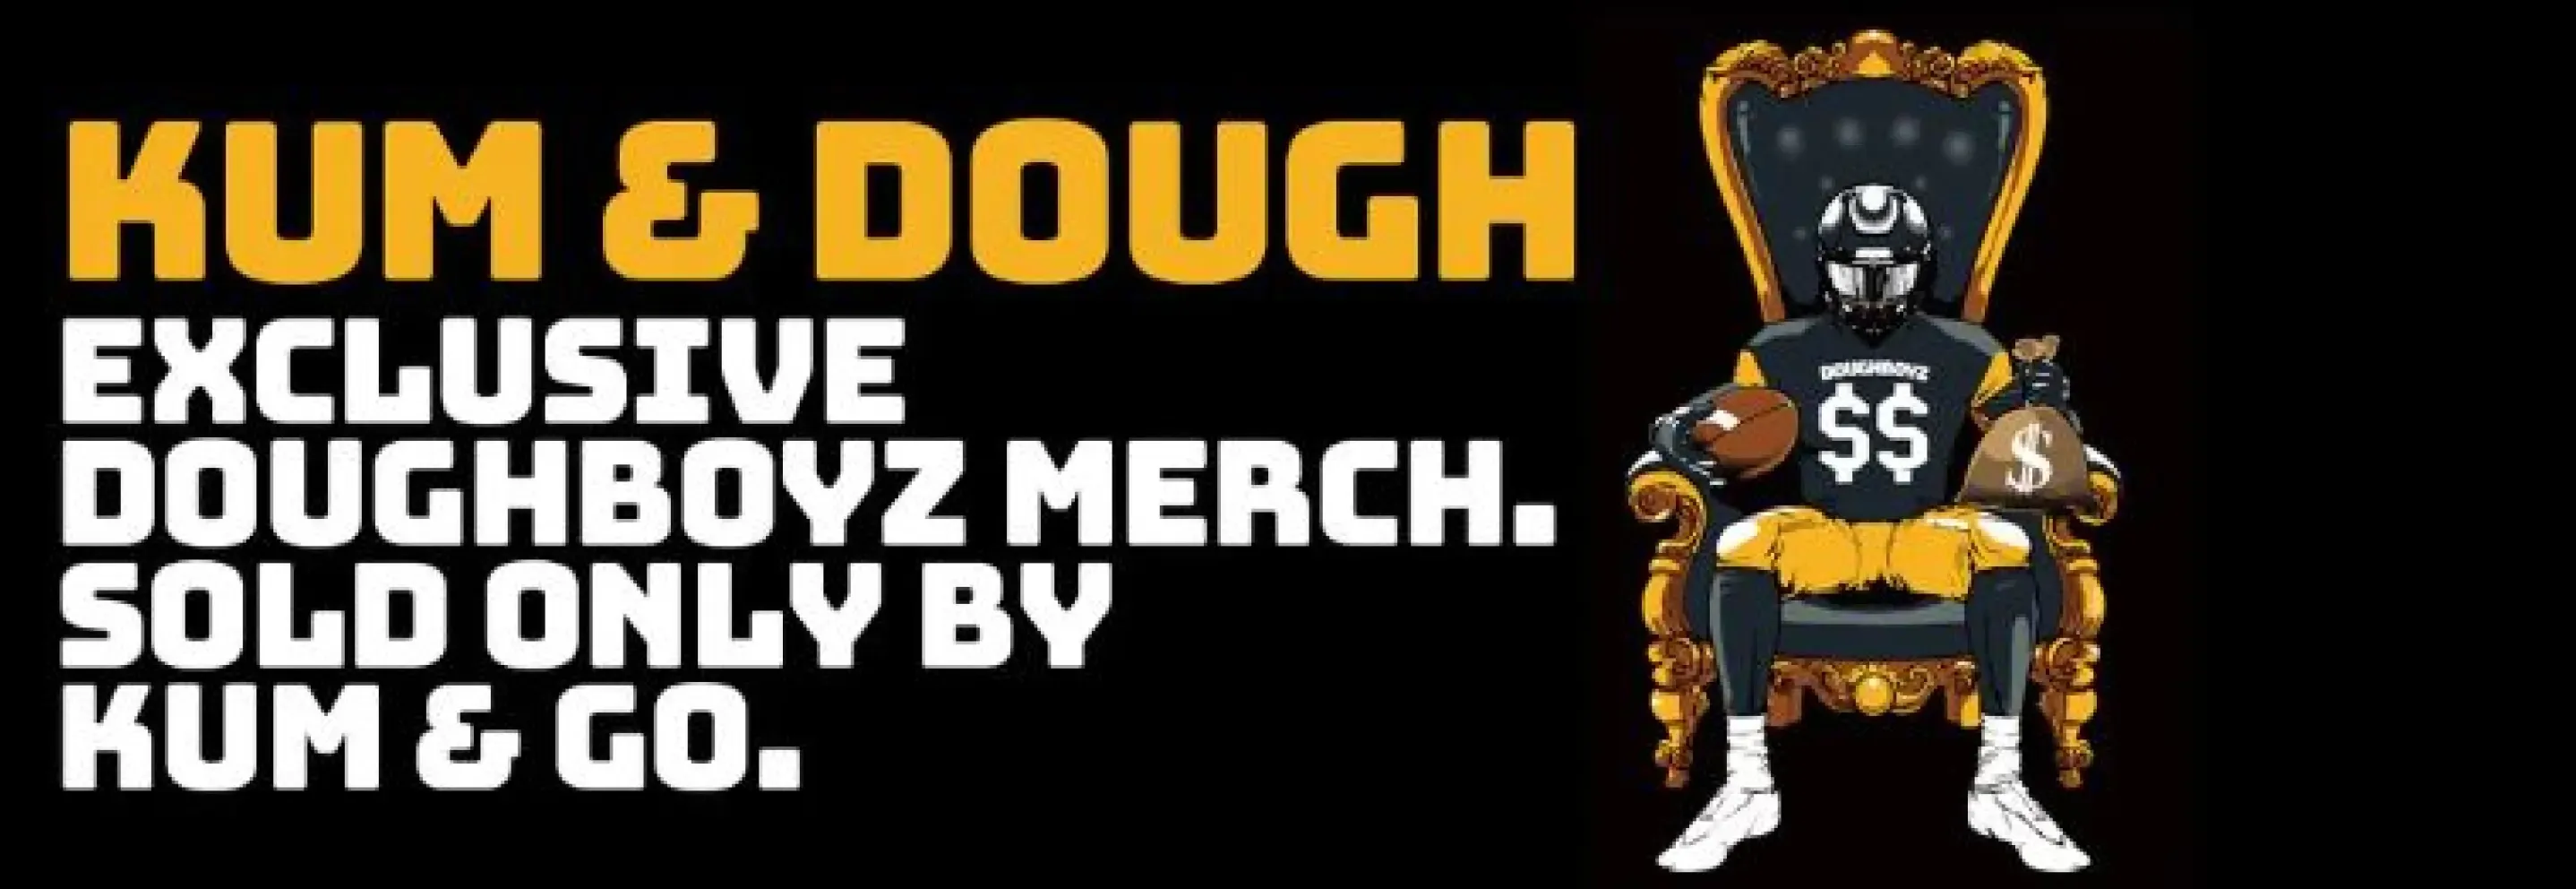 Kum & Go + Iowa Doughboyz partner to bring fans exclusive merch line